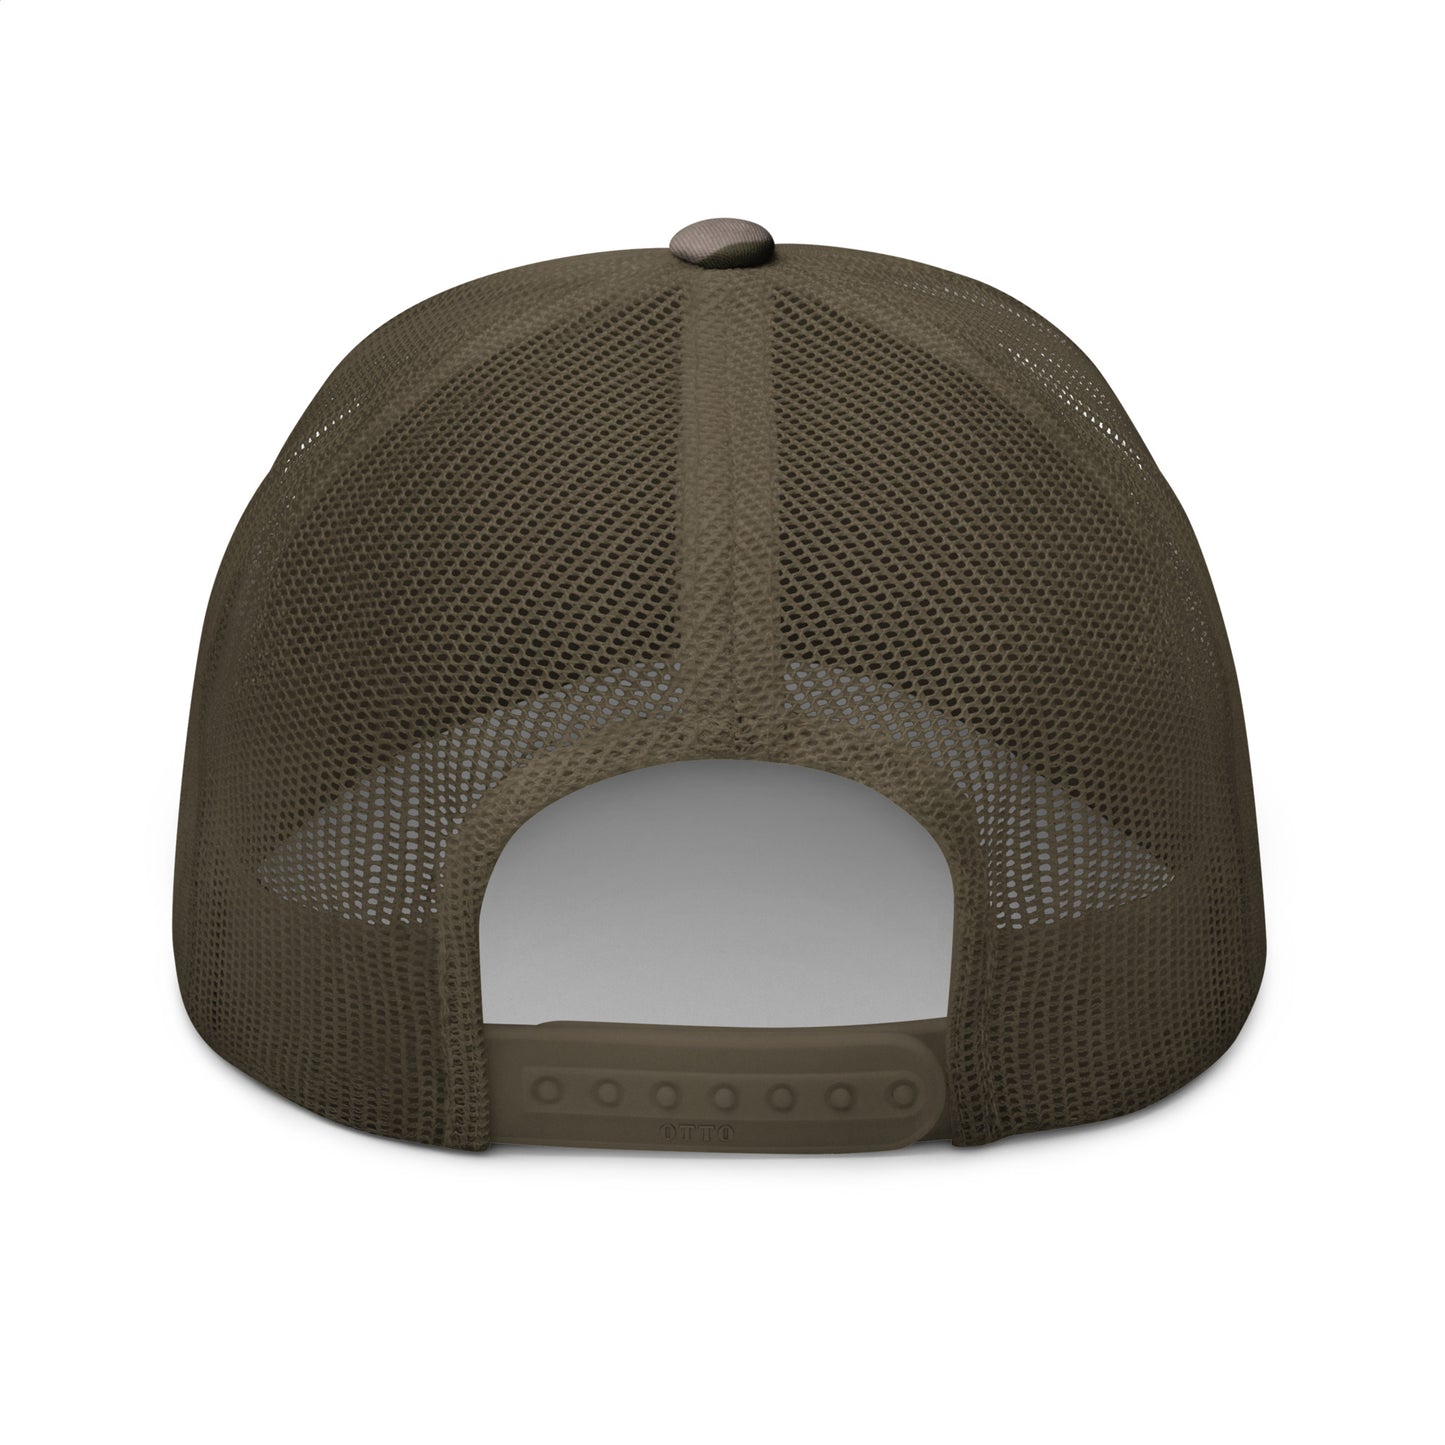 USAF AMMO Proud Heritage Camouflage trucker hat